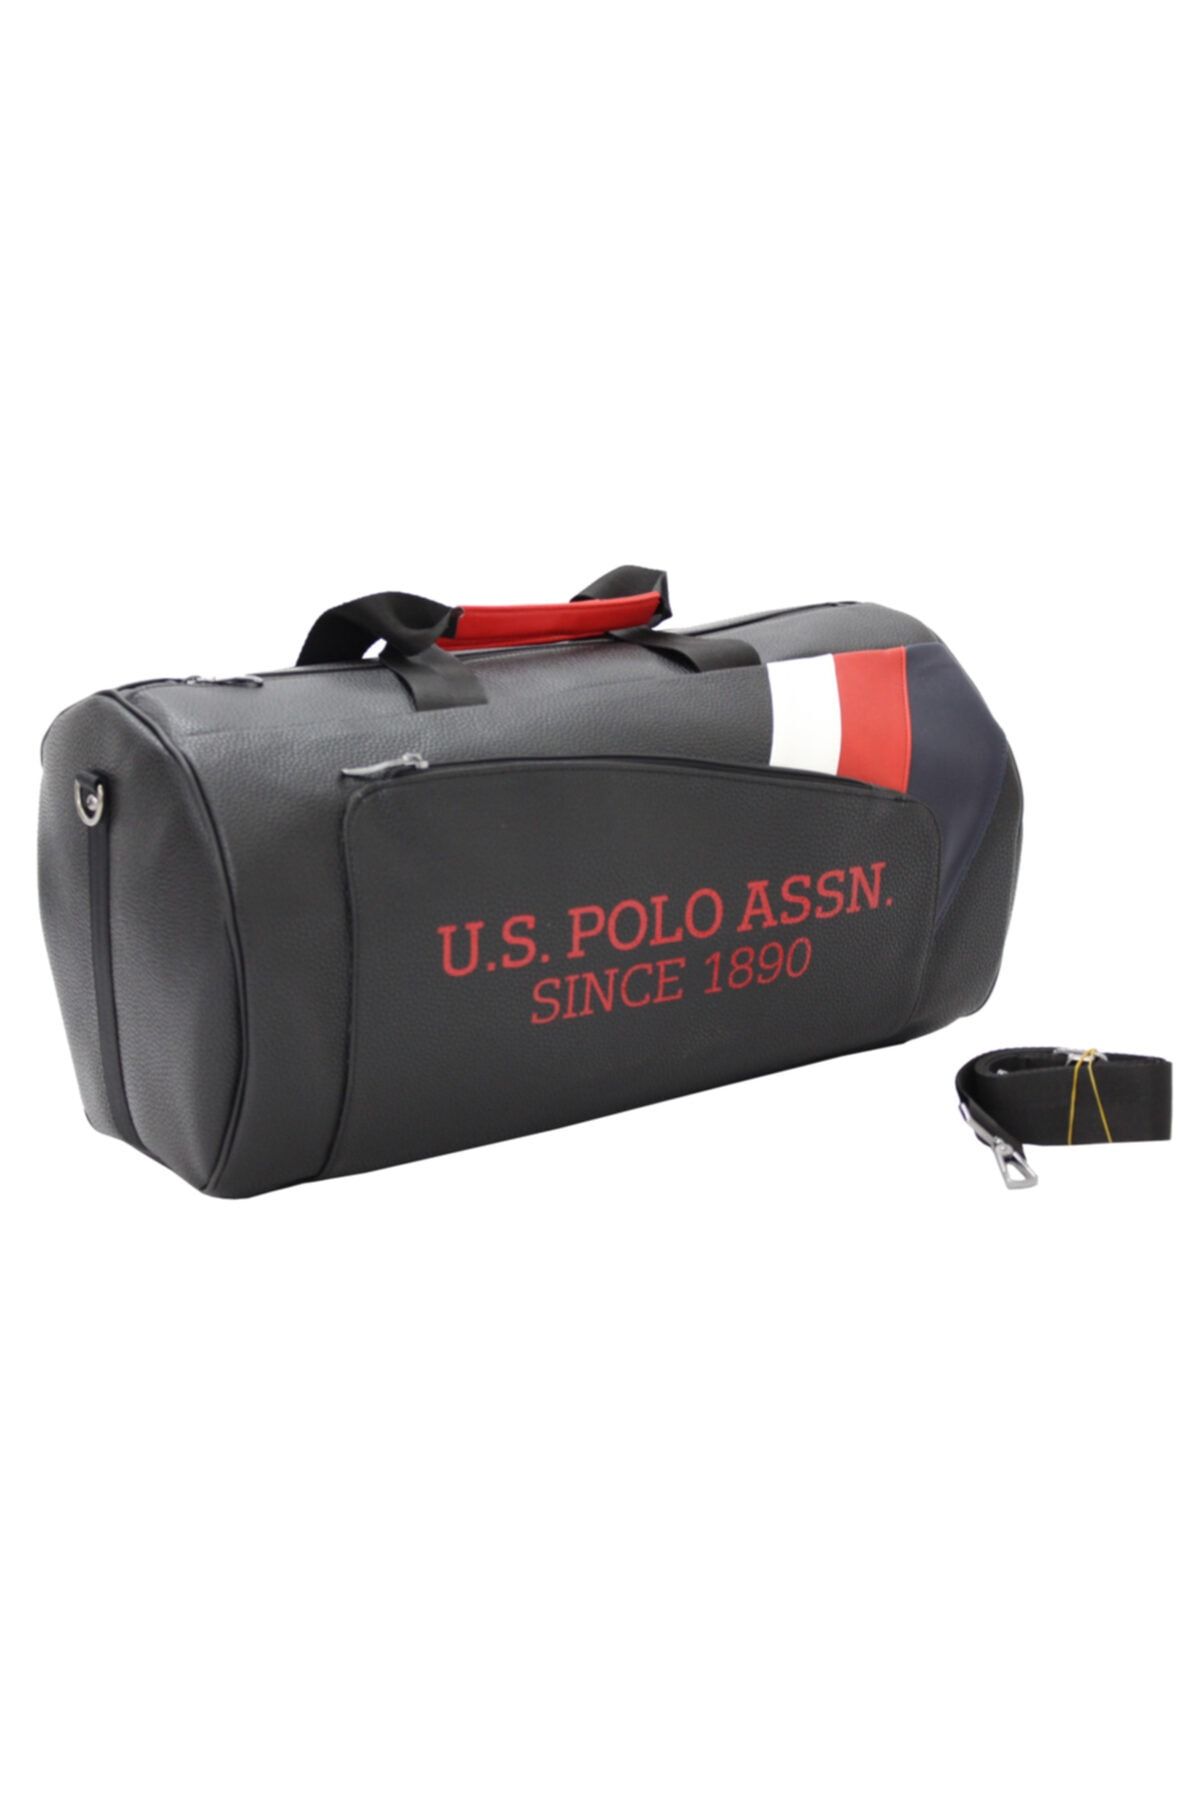 U.S. Polo Assn. Plduf 9501 Us Polo Assn Suni Deri Seyahat Çantası / Spor Çanta